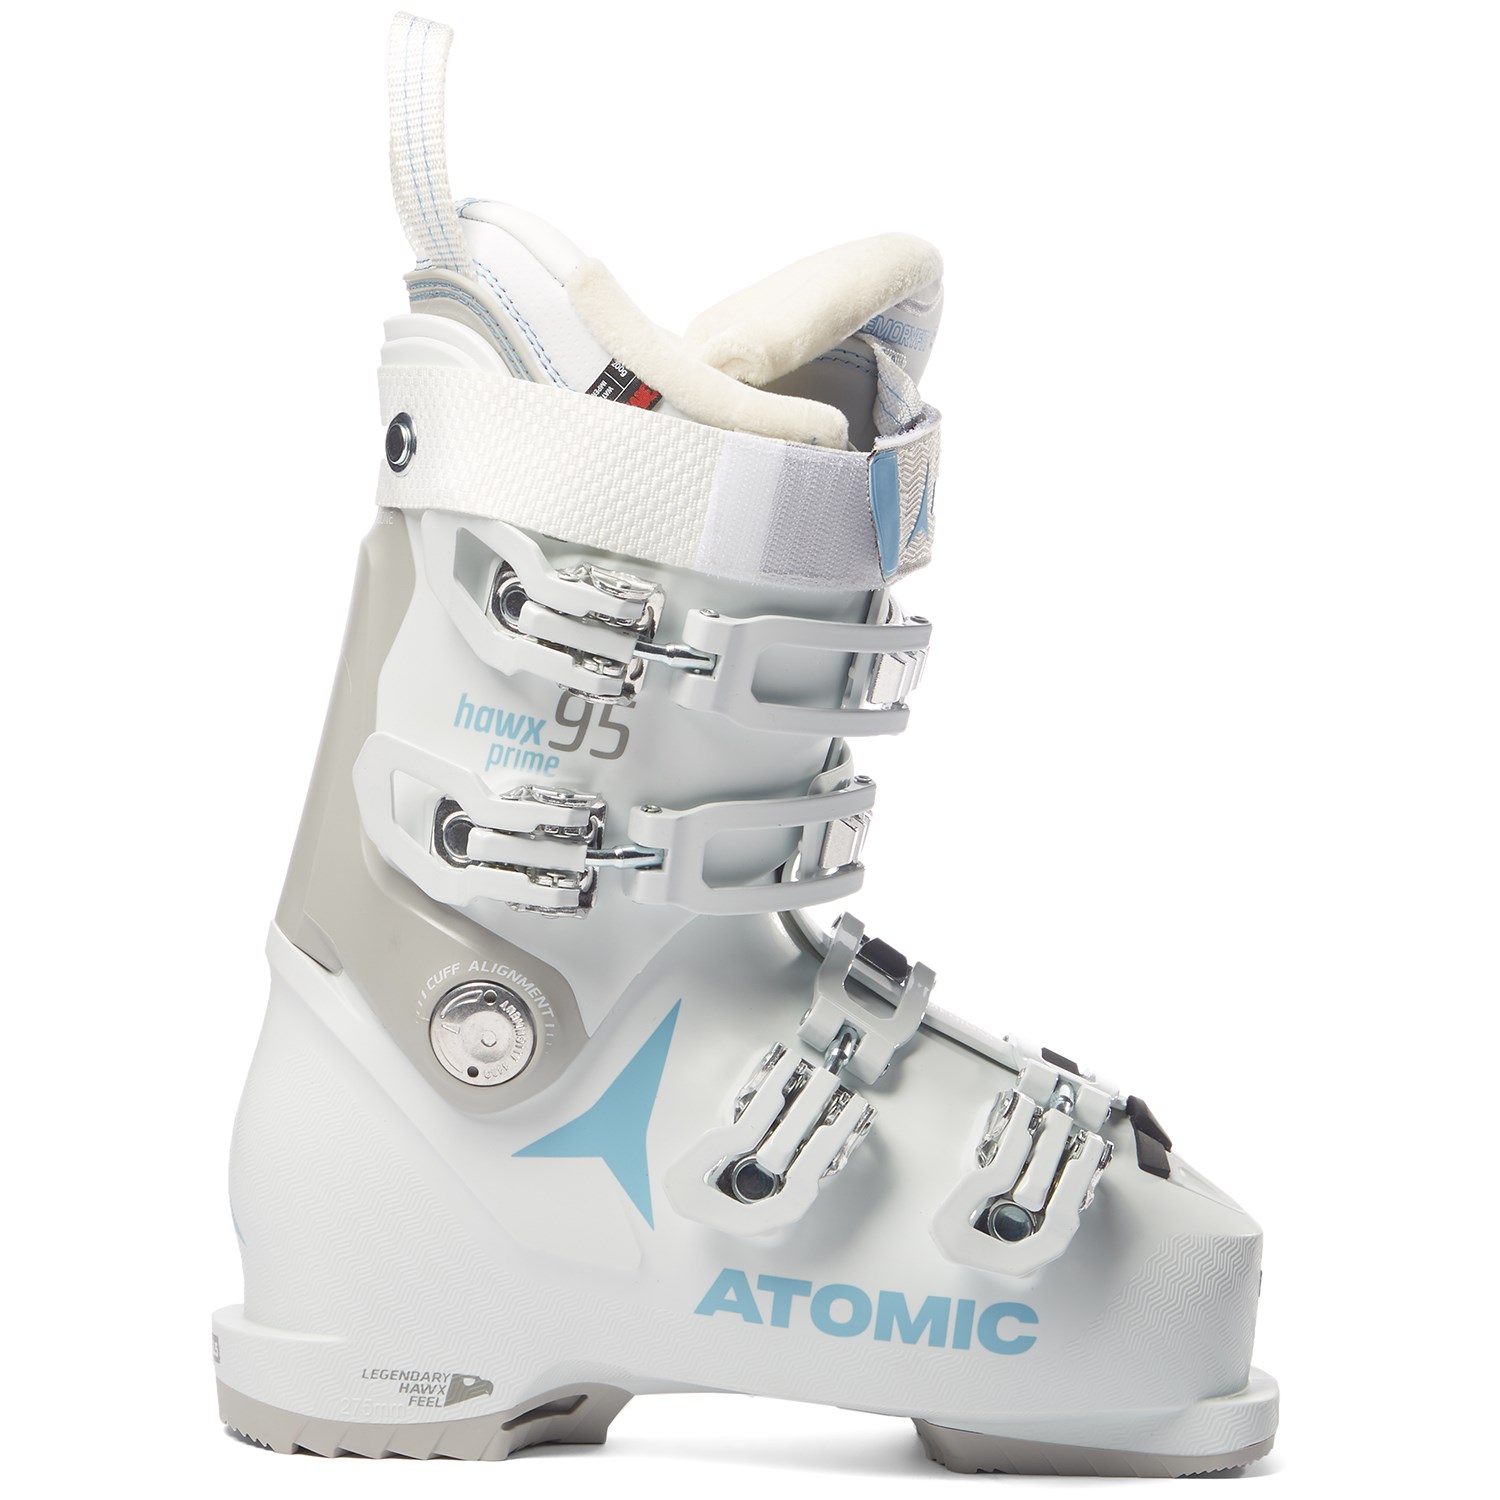 Atomic Hawx Prime 95 W Ski BootsBrand New 2019MP 24/24.5 